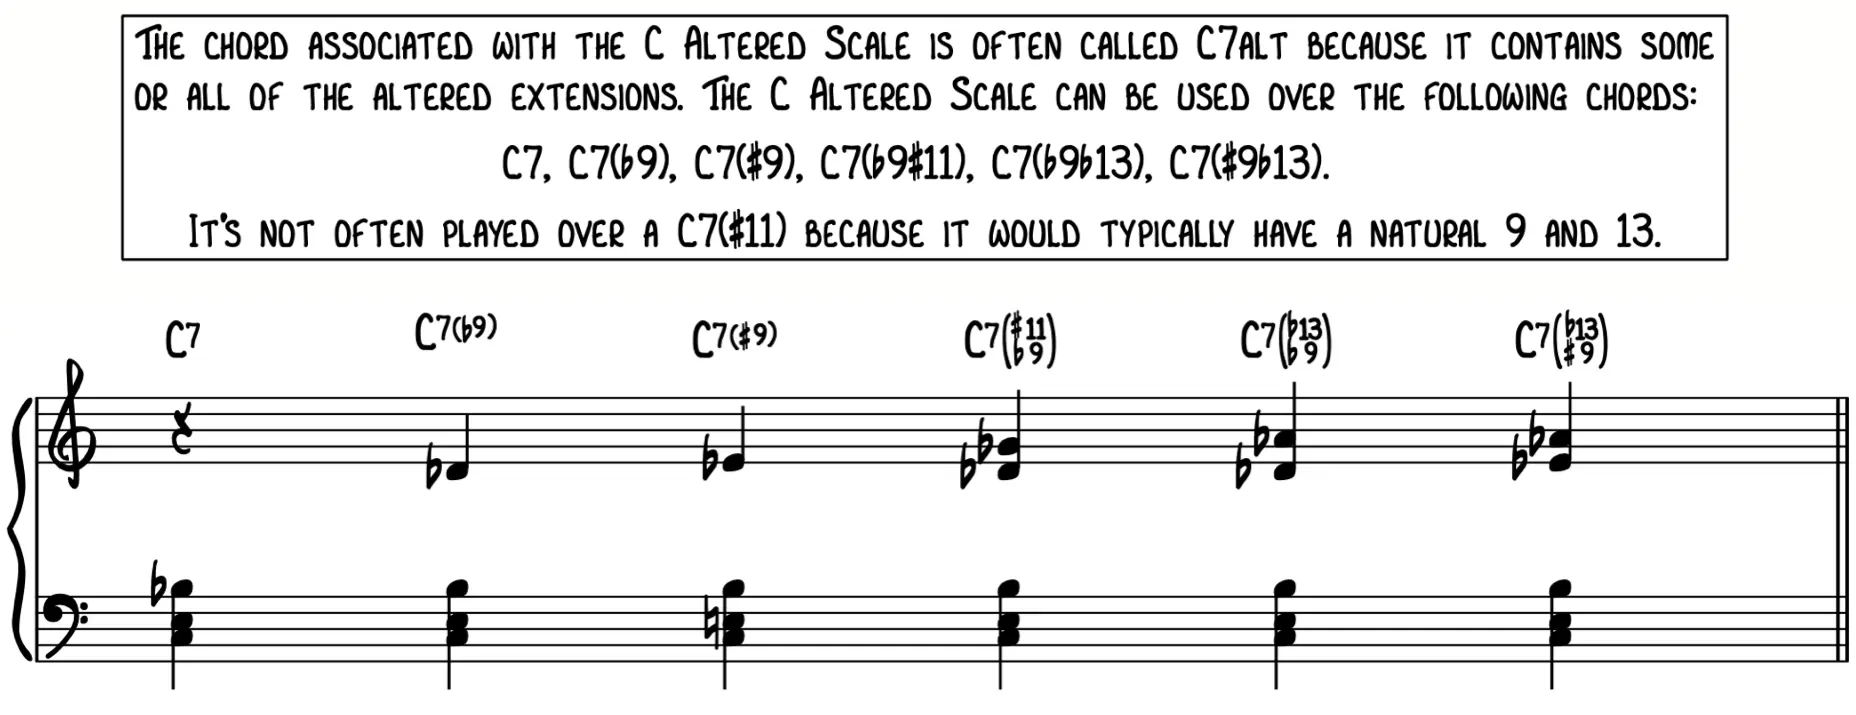 Altered Chord Notation and Interpretation